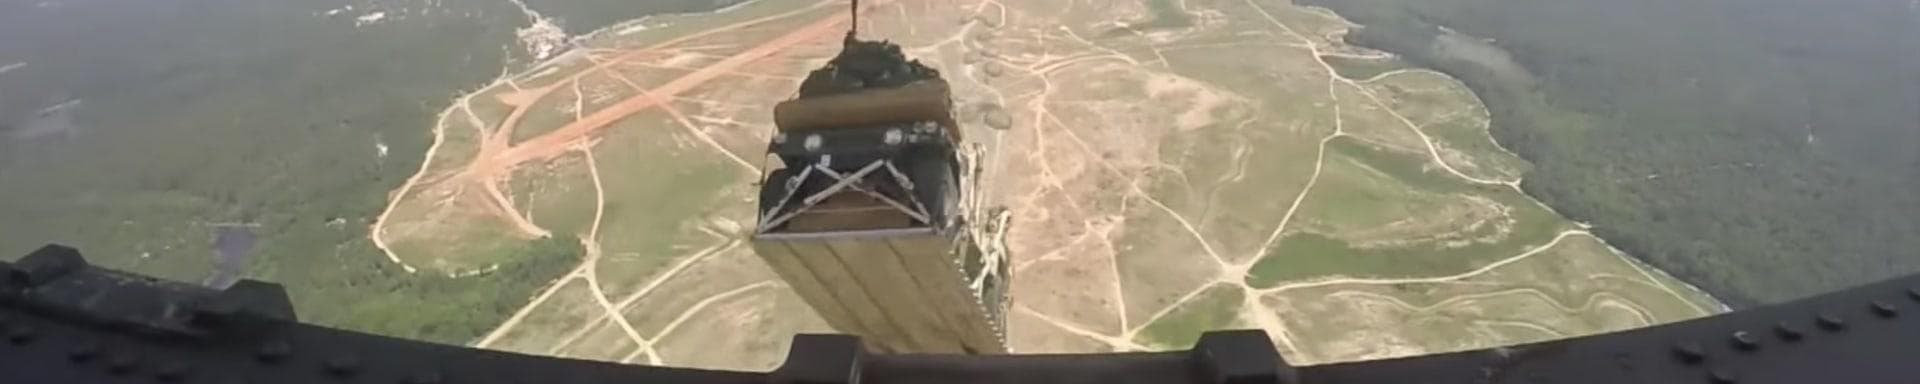 Exercito americano entregando jipes Humvee de paraquedas